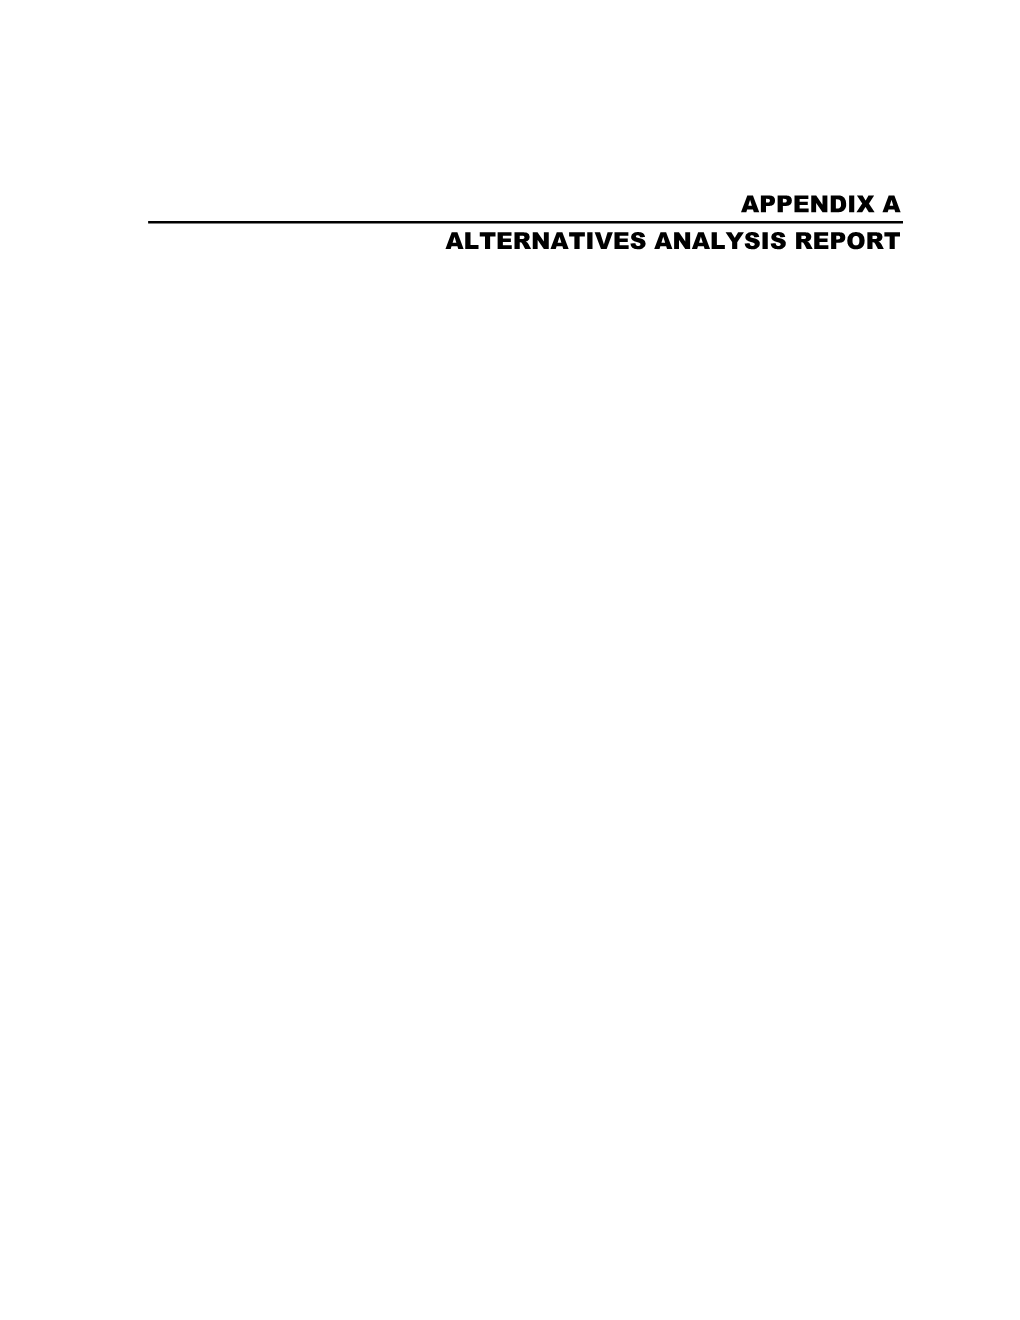 Alternatives Analysis Report